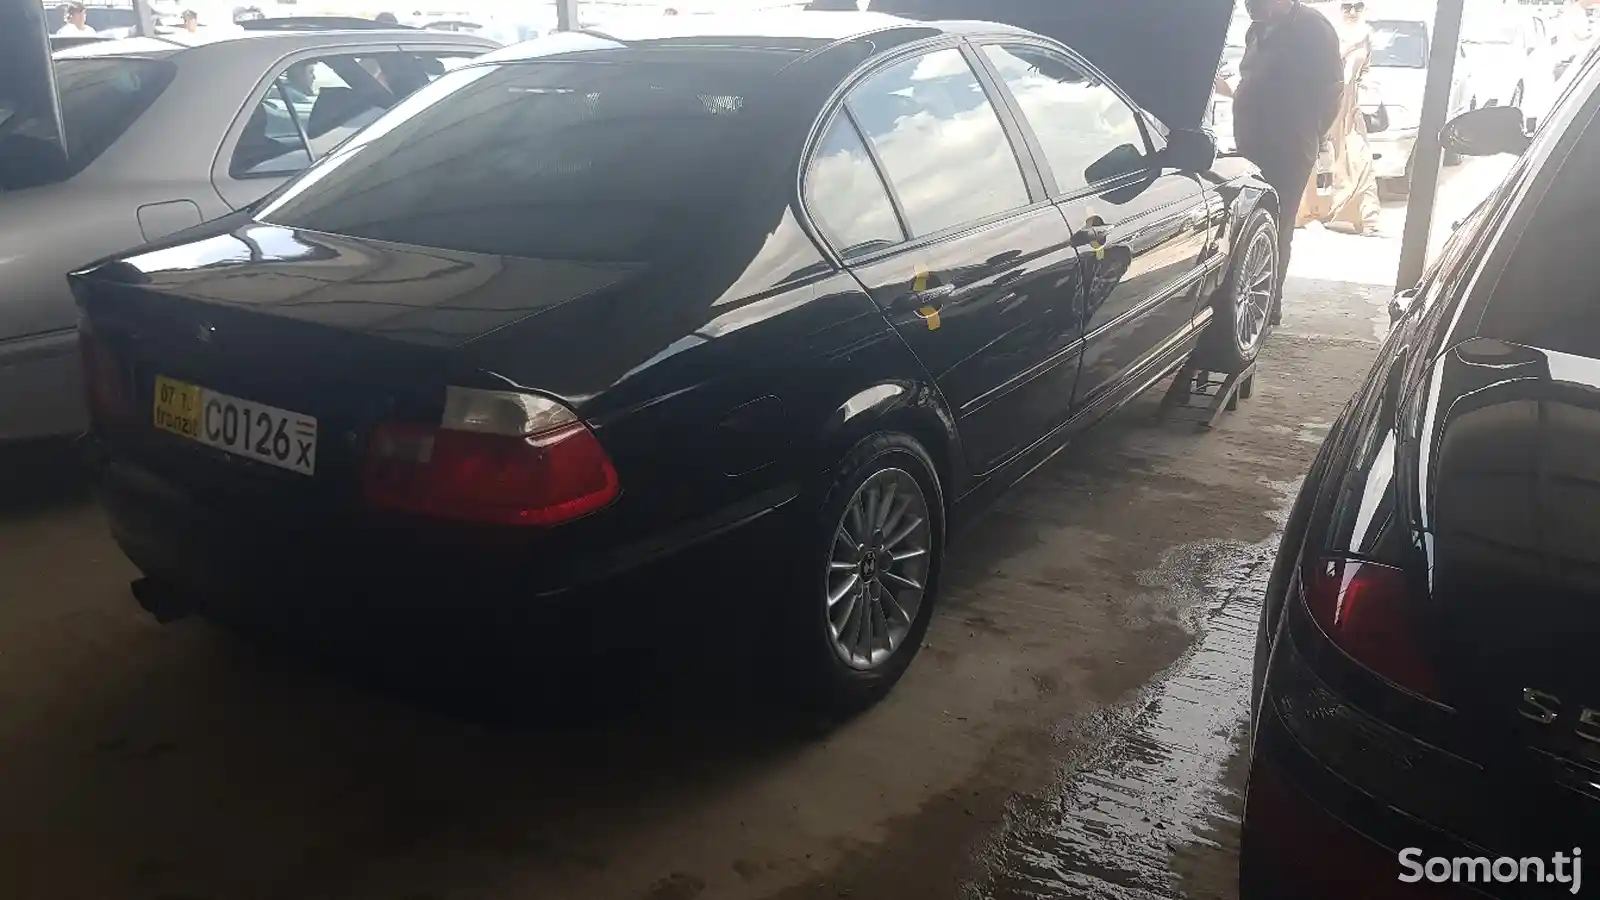 BMW 3 series, 2000-2